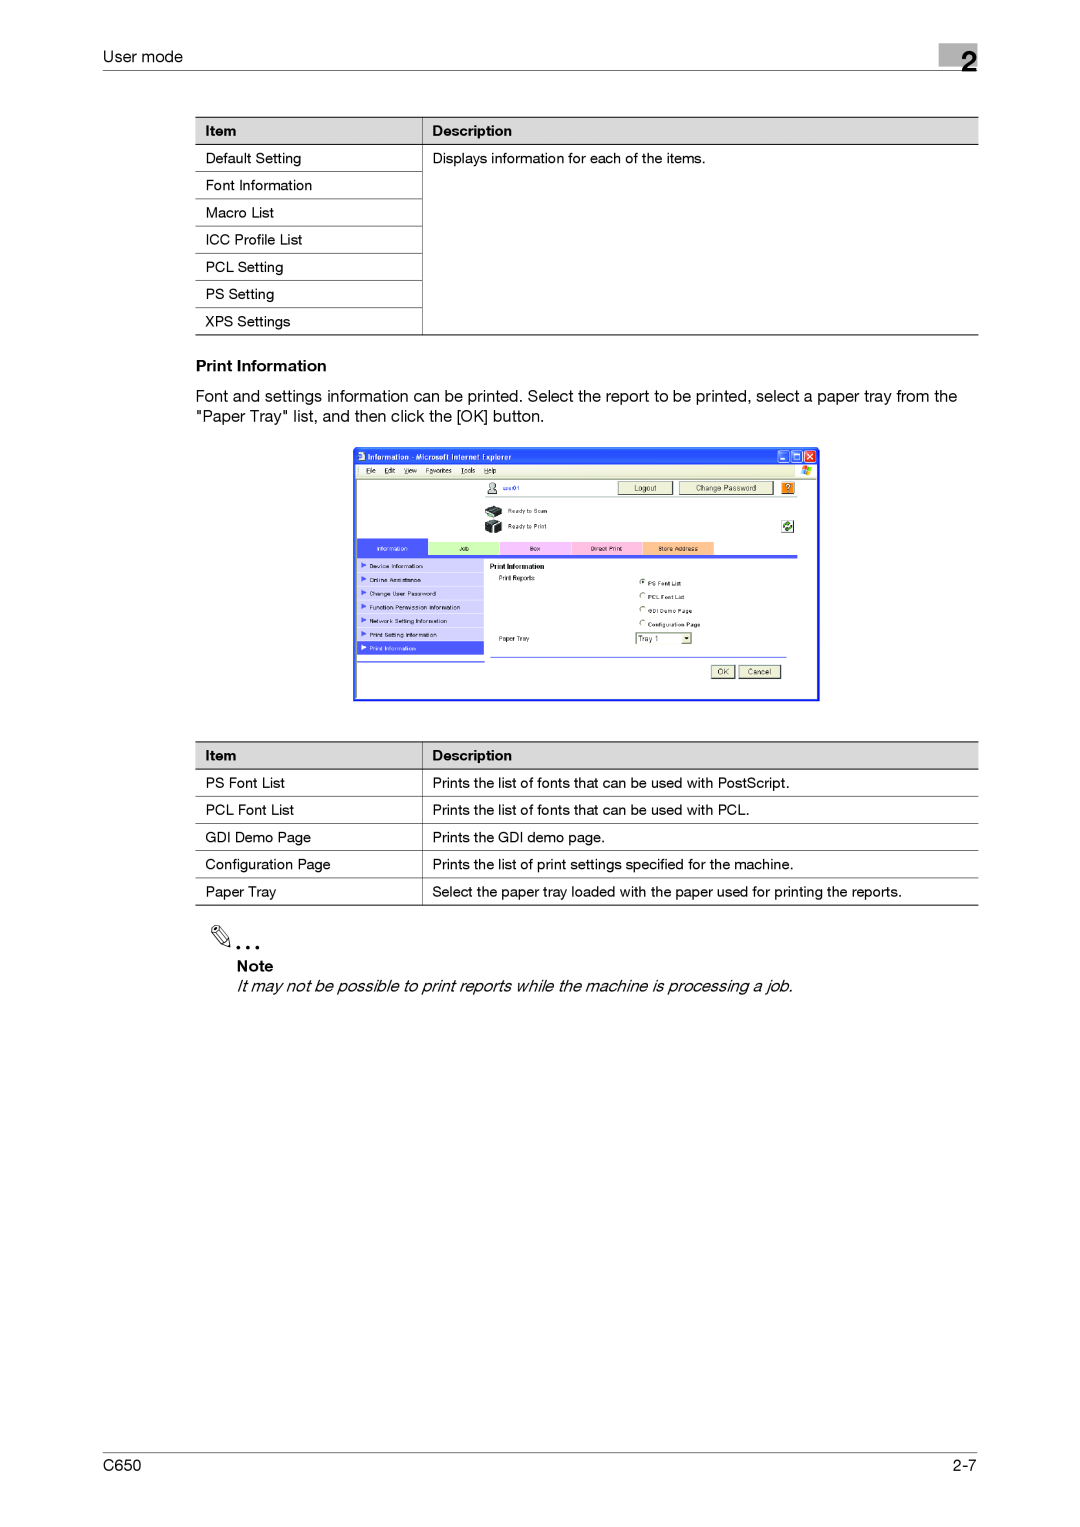 Konica Minolta C650 manual User mode, Print Information 